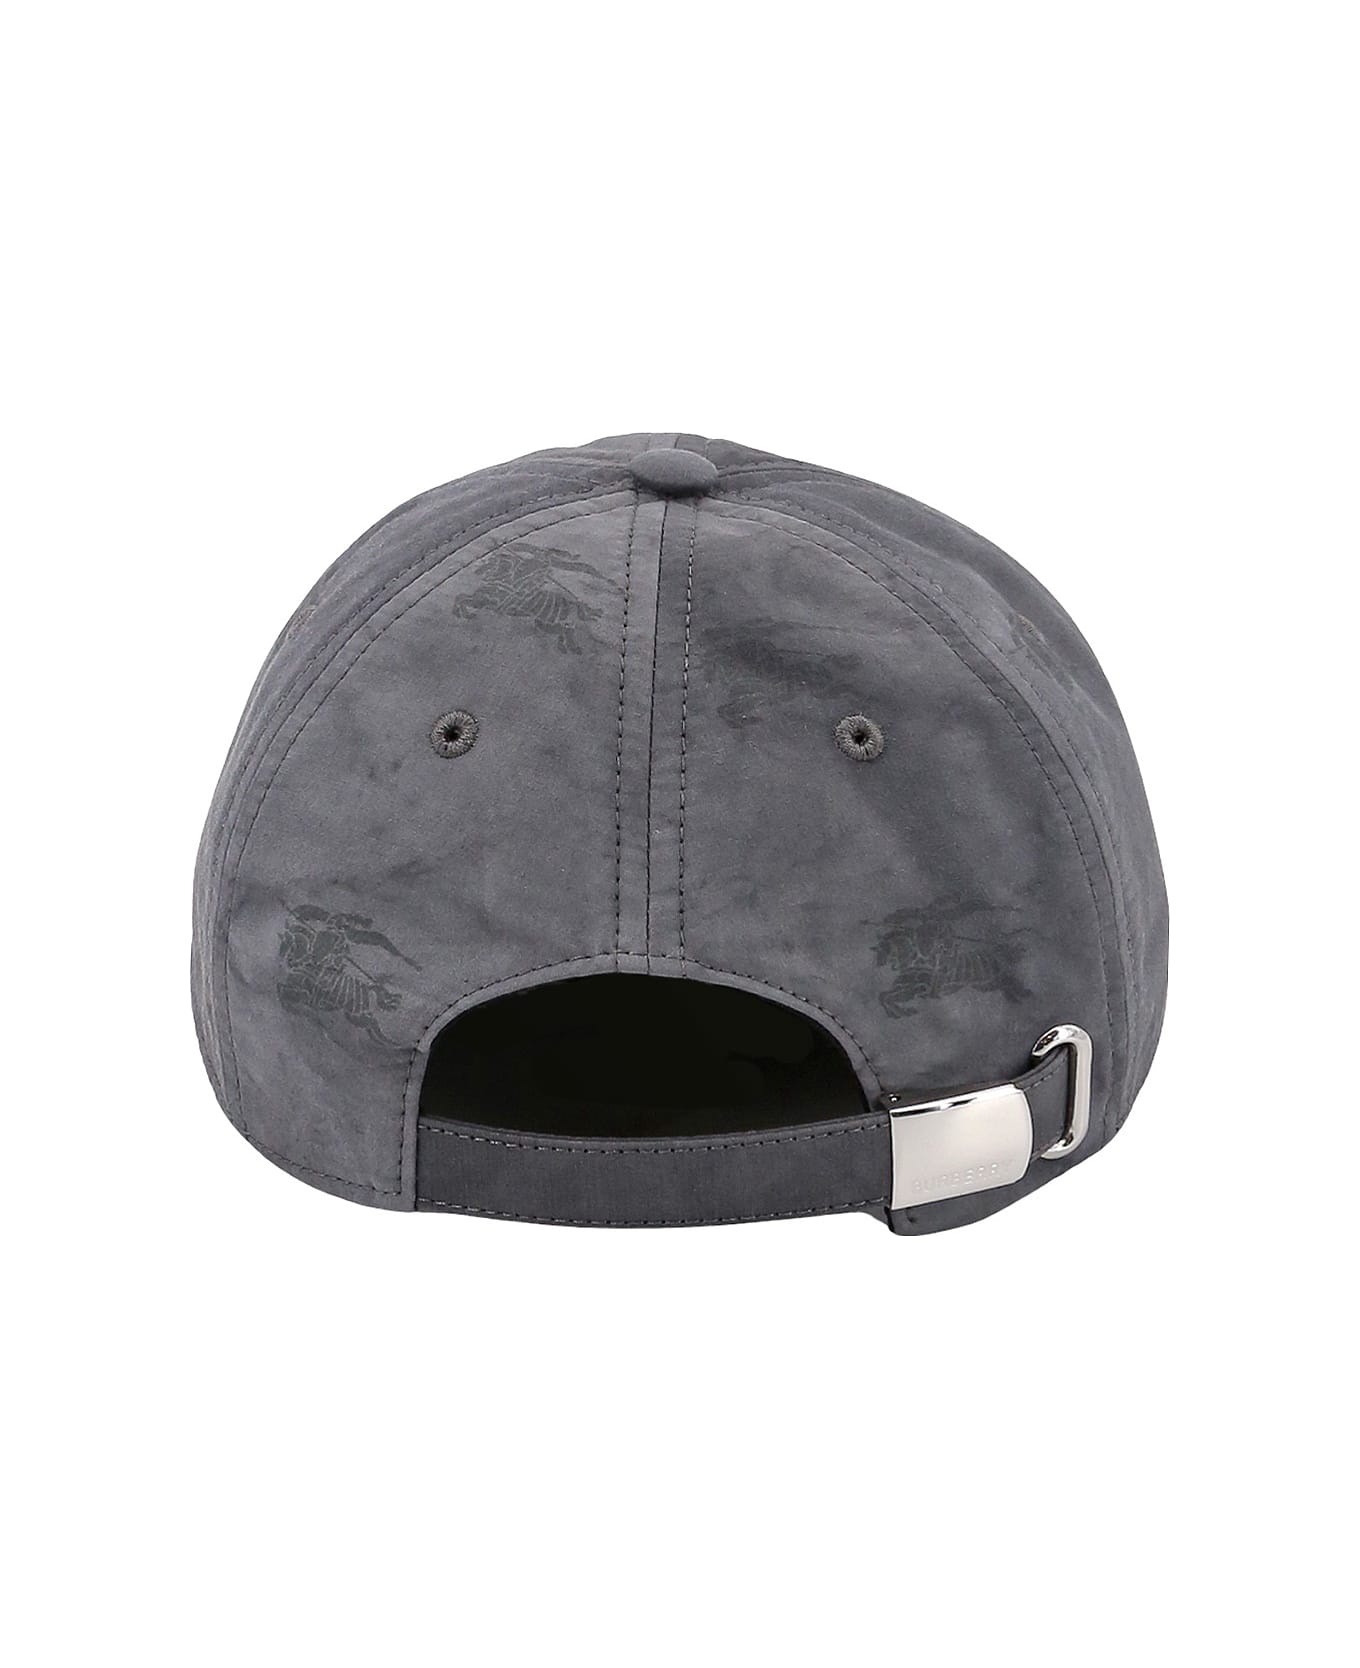 Burberry Hat - Grey